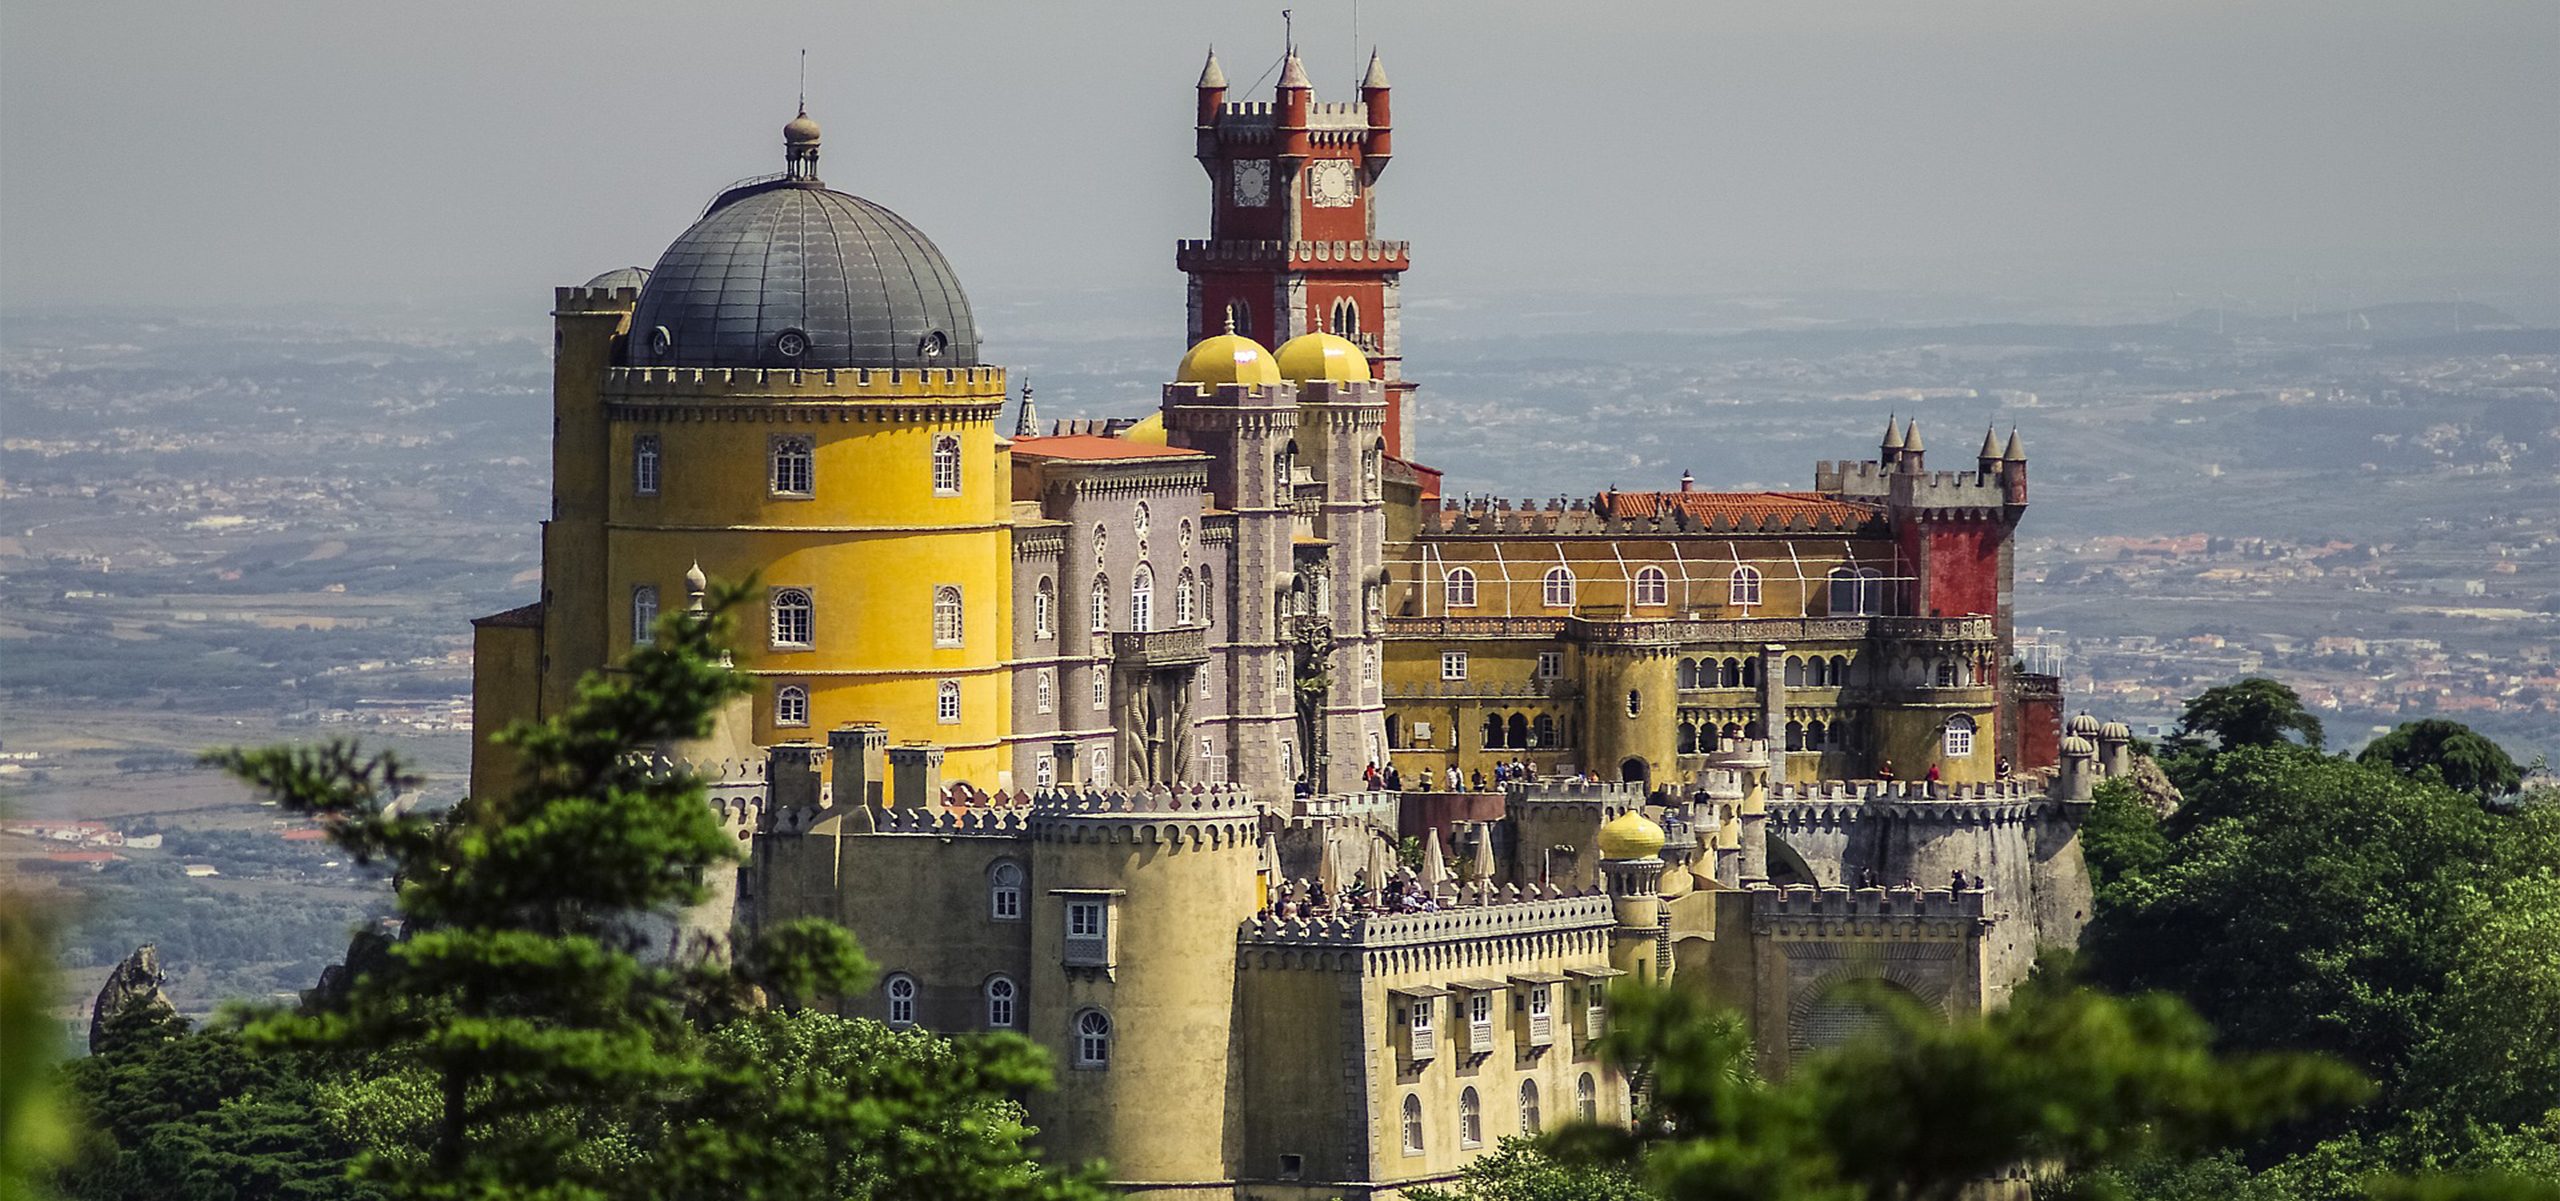 Portugal - Pena Palace